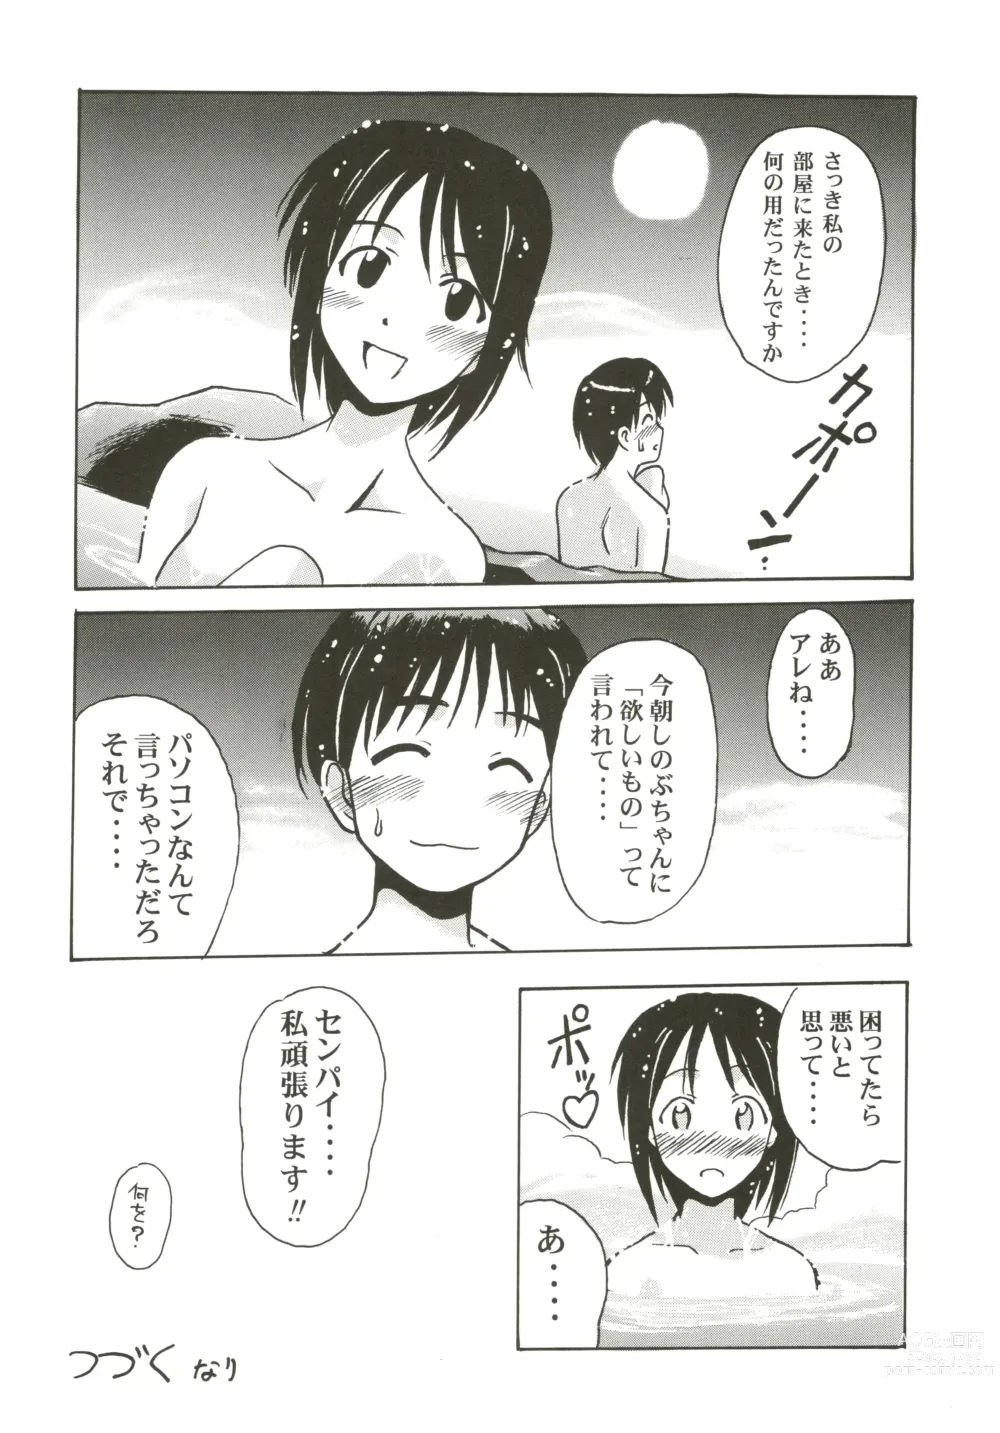 Page 16 of doujinshi Shinobu SP.